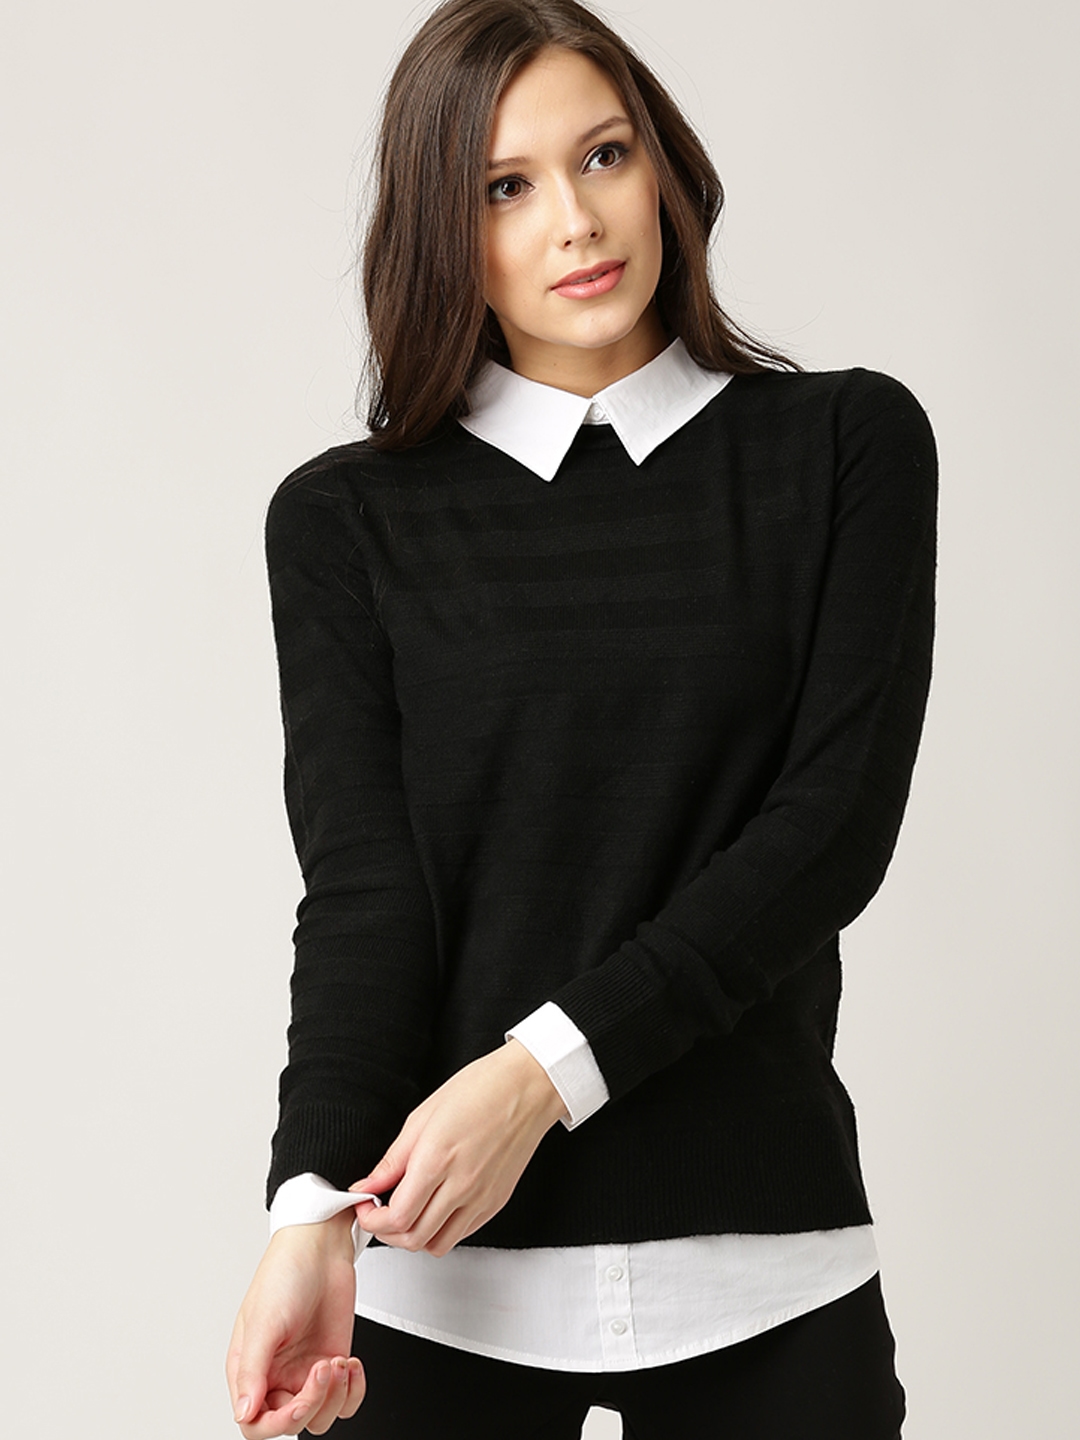 ESPRIT Women Black Self-Striped Layered Sweater